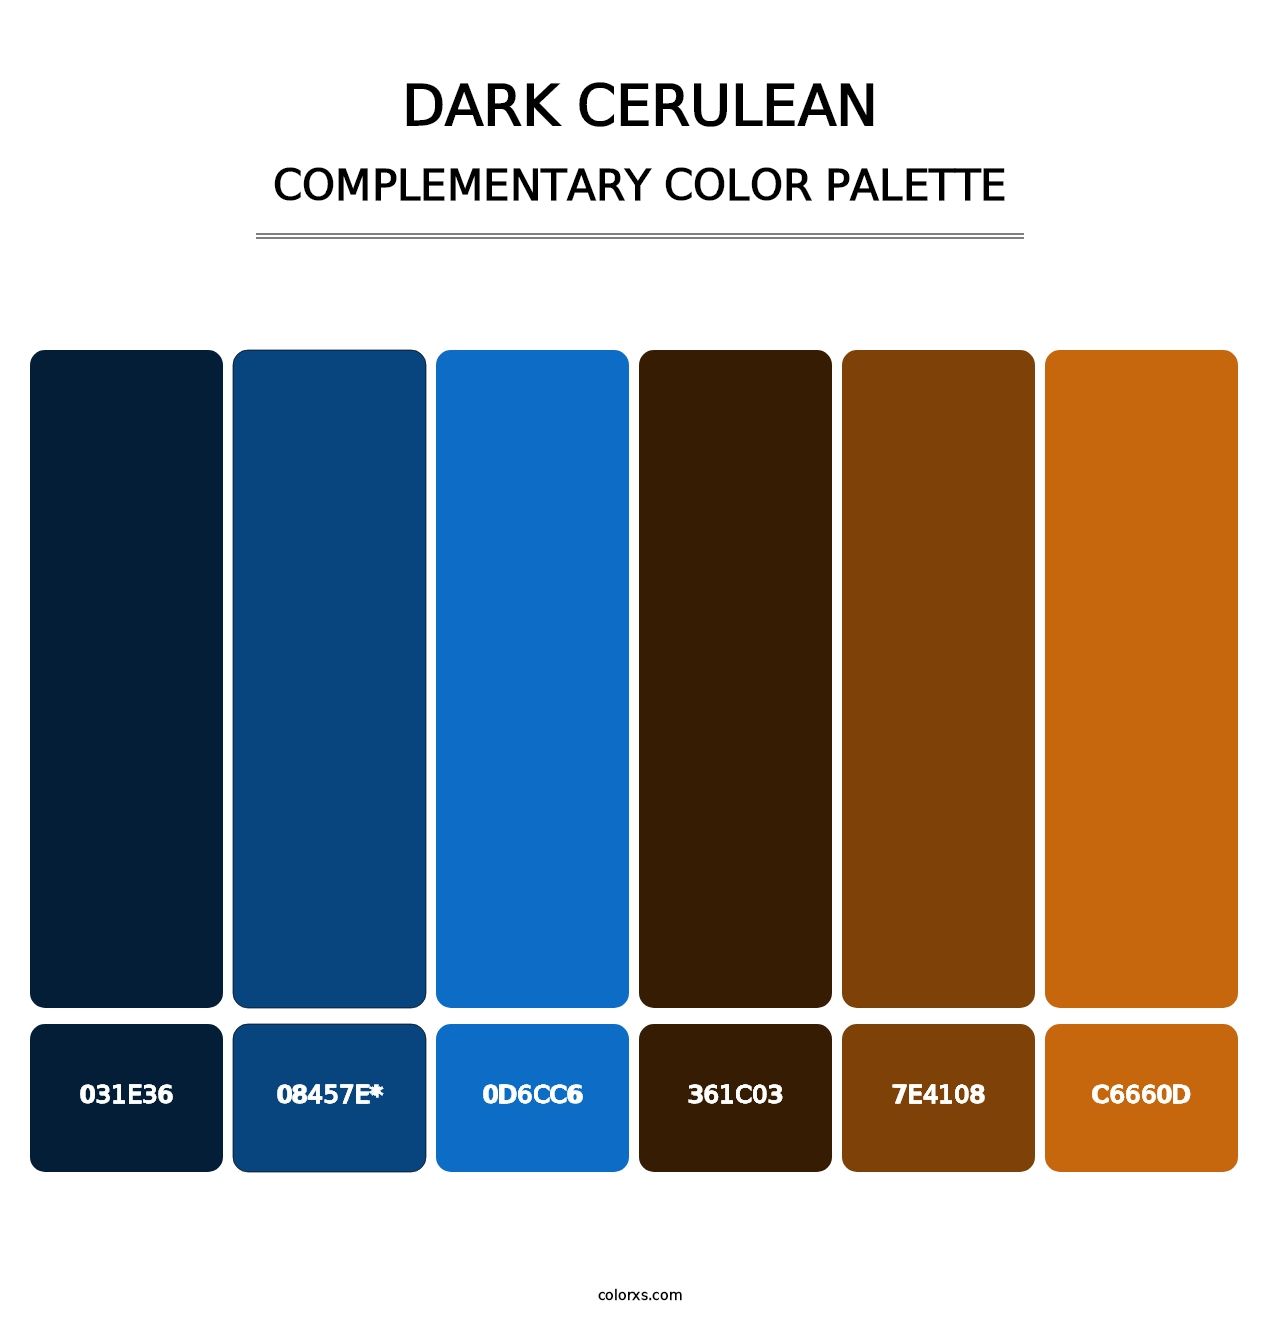 Dark Cerulean - Complementary Color Palette